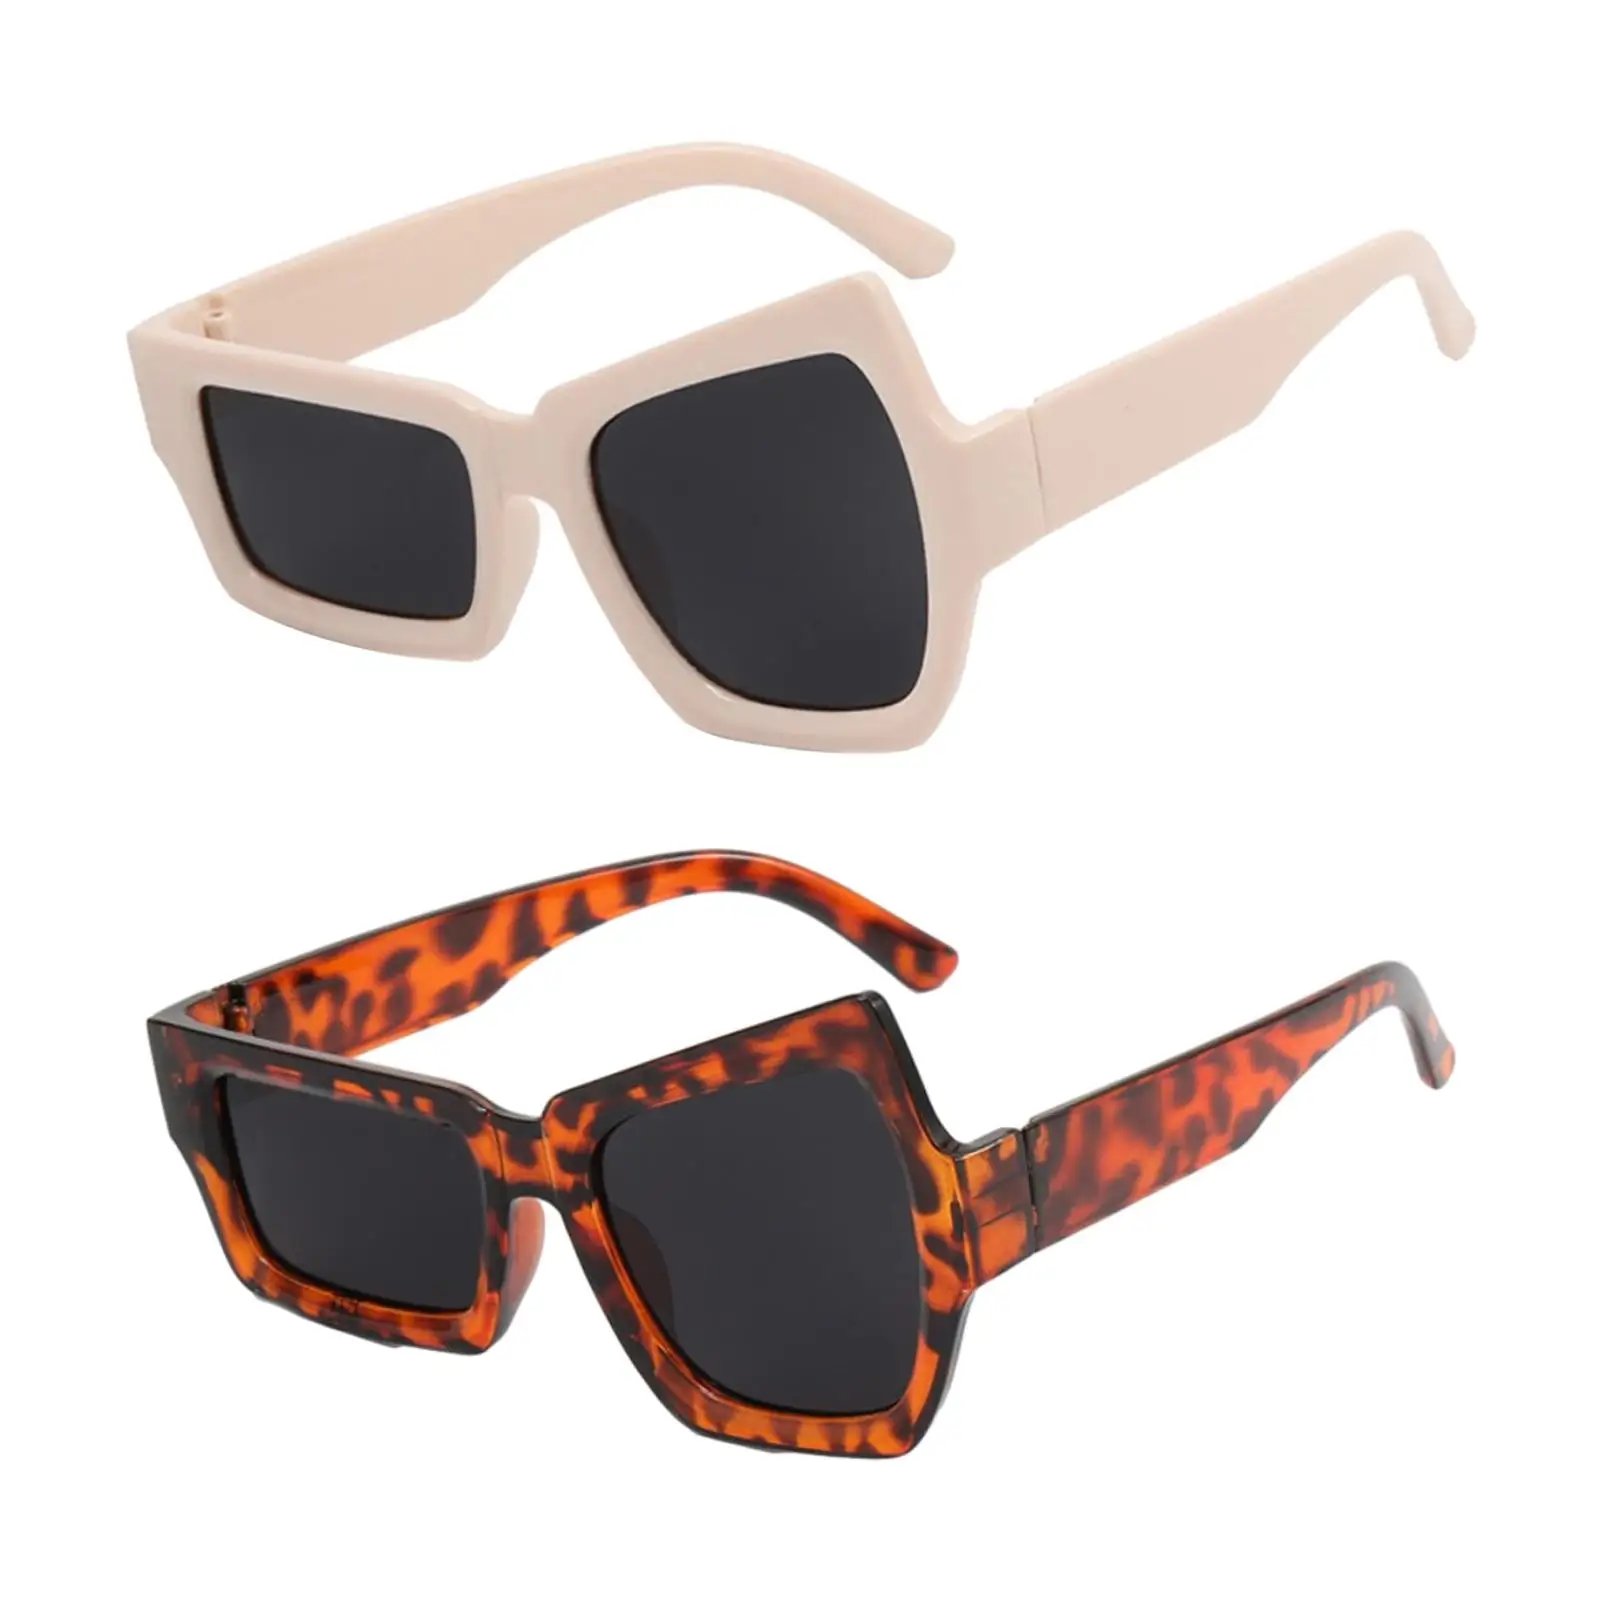 Funny Sunglasses Sun Protection Eyewear Stylish for Shopping Beach Traveling